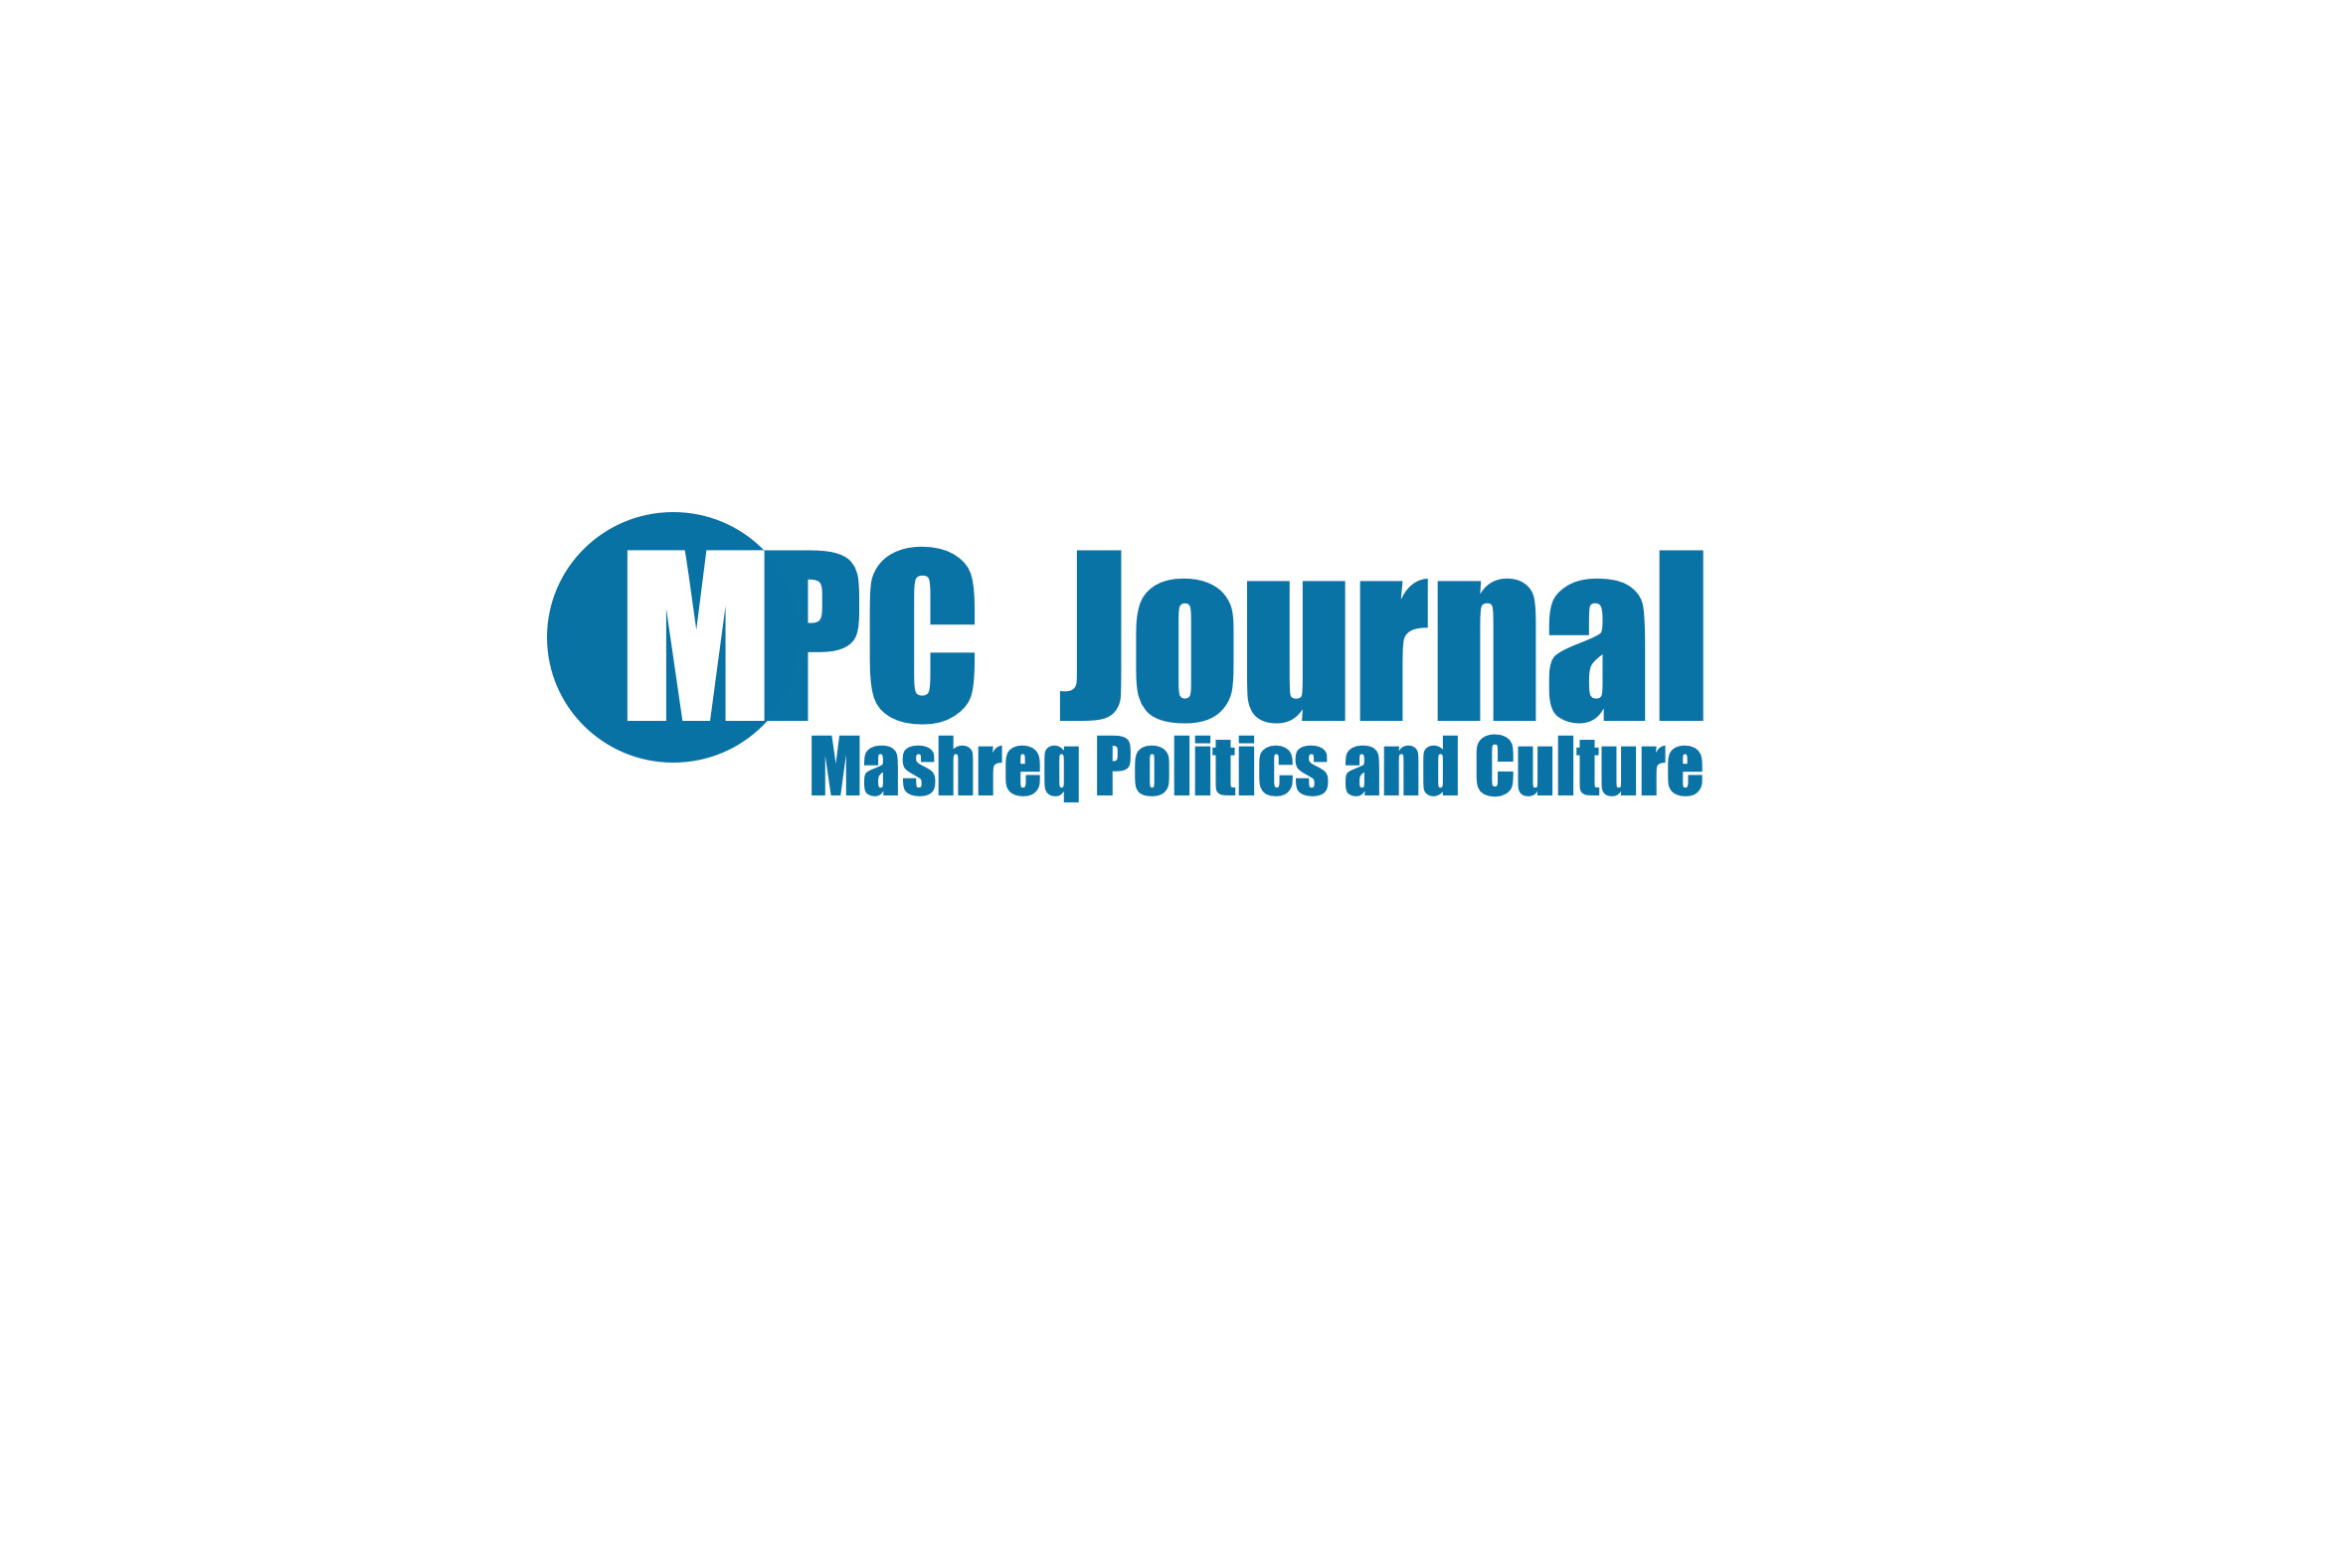 Philosophy - MPC JOURNAL - Mashreq Politics and Culture, Hakim Khatib - Submissions